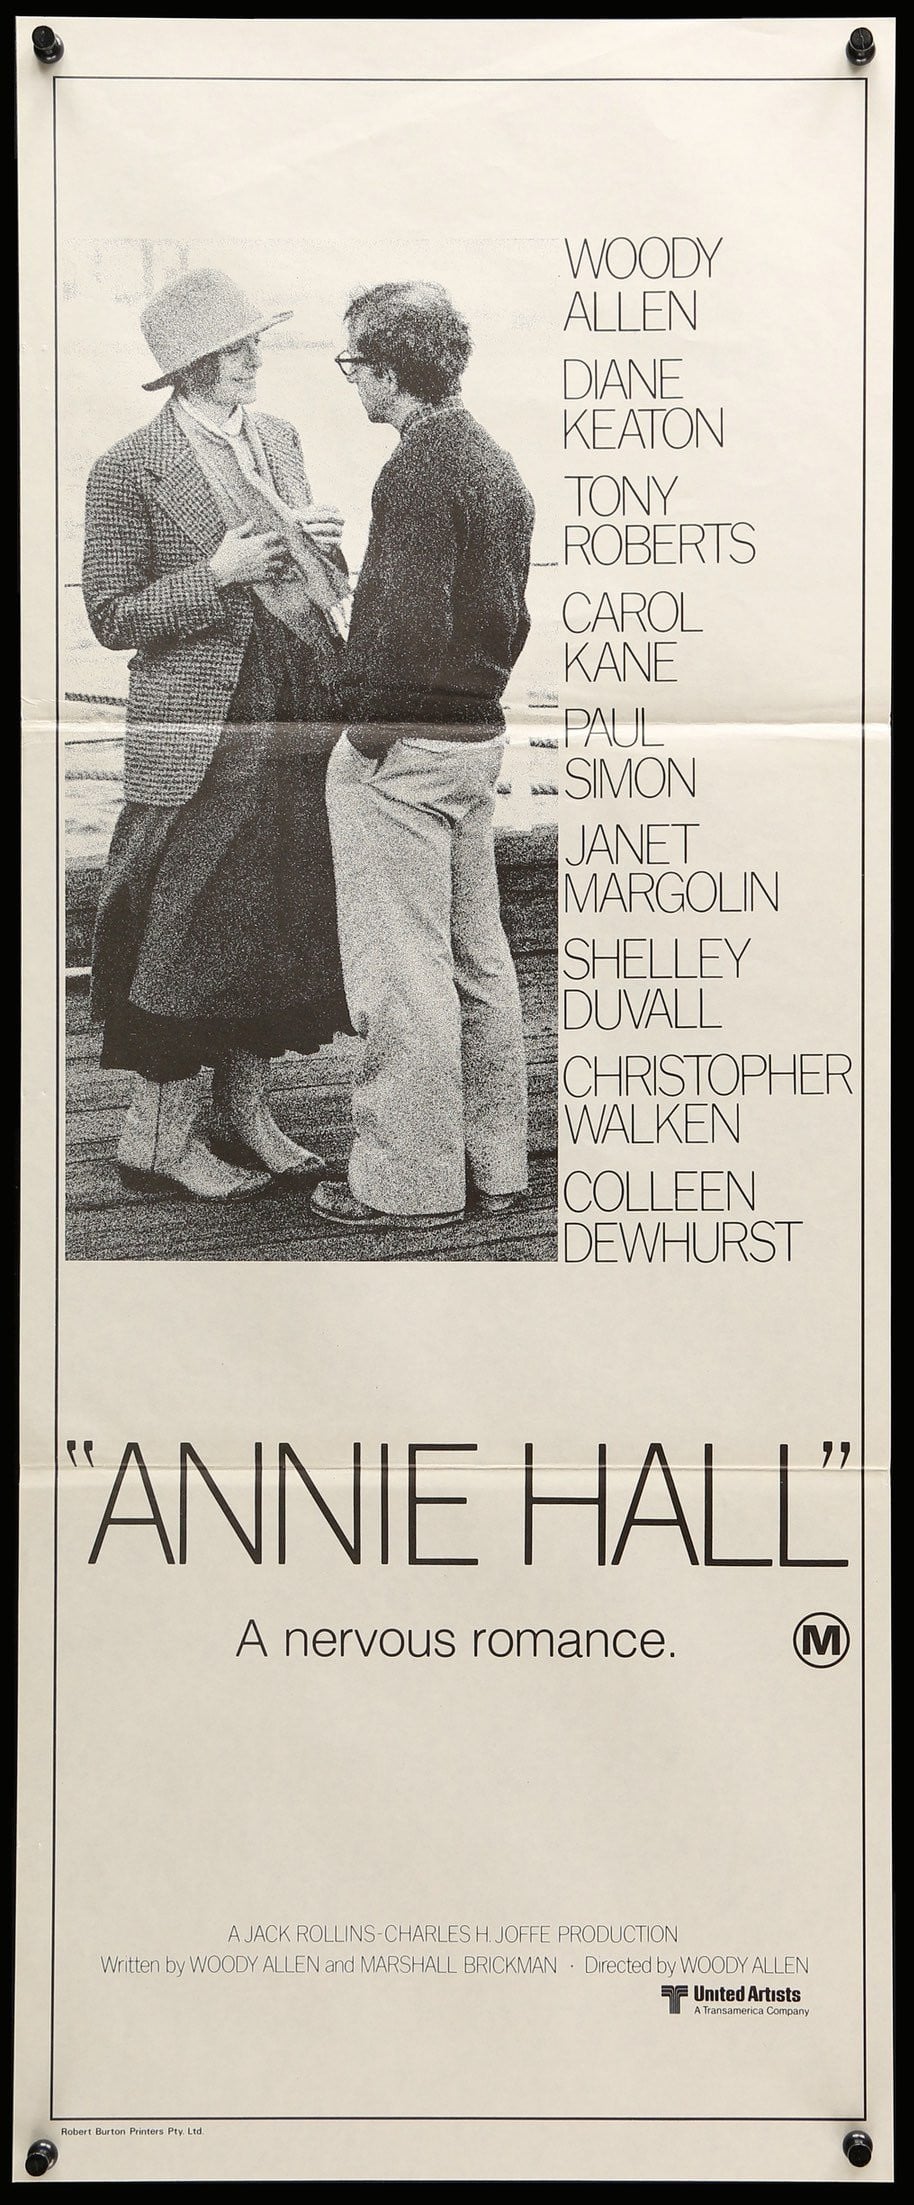 Annie Hall (1977) original movie poster for sale at Original Film Art